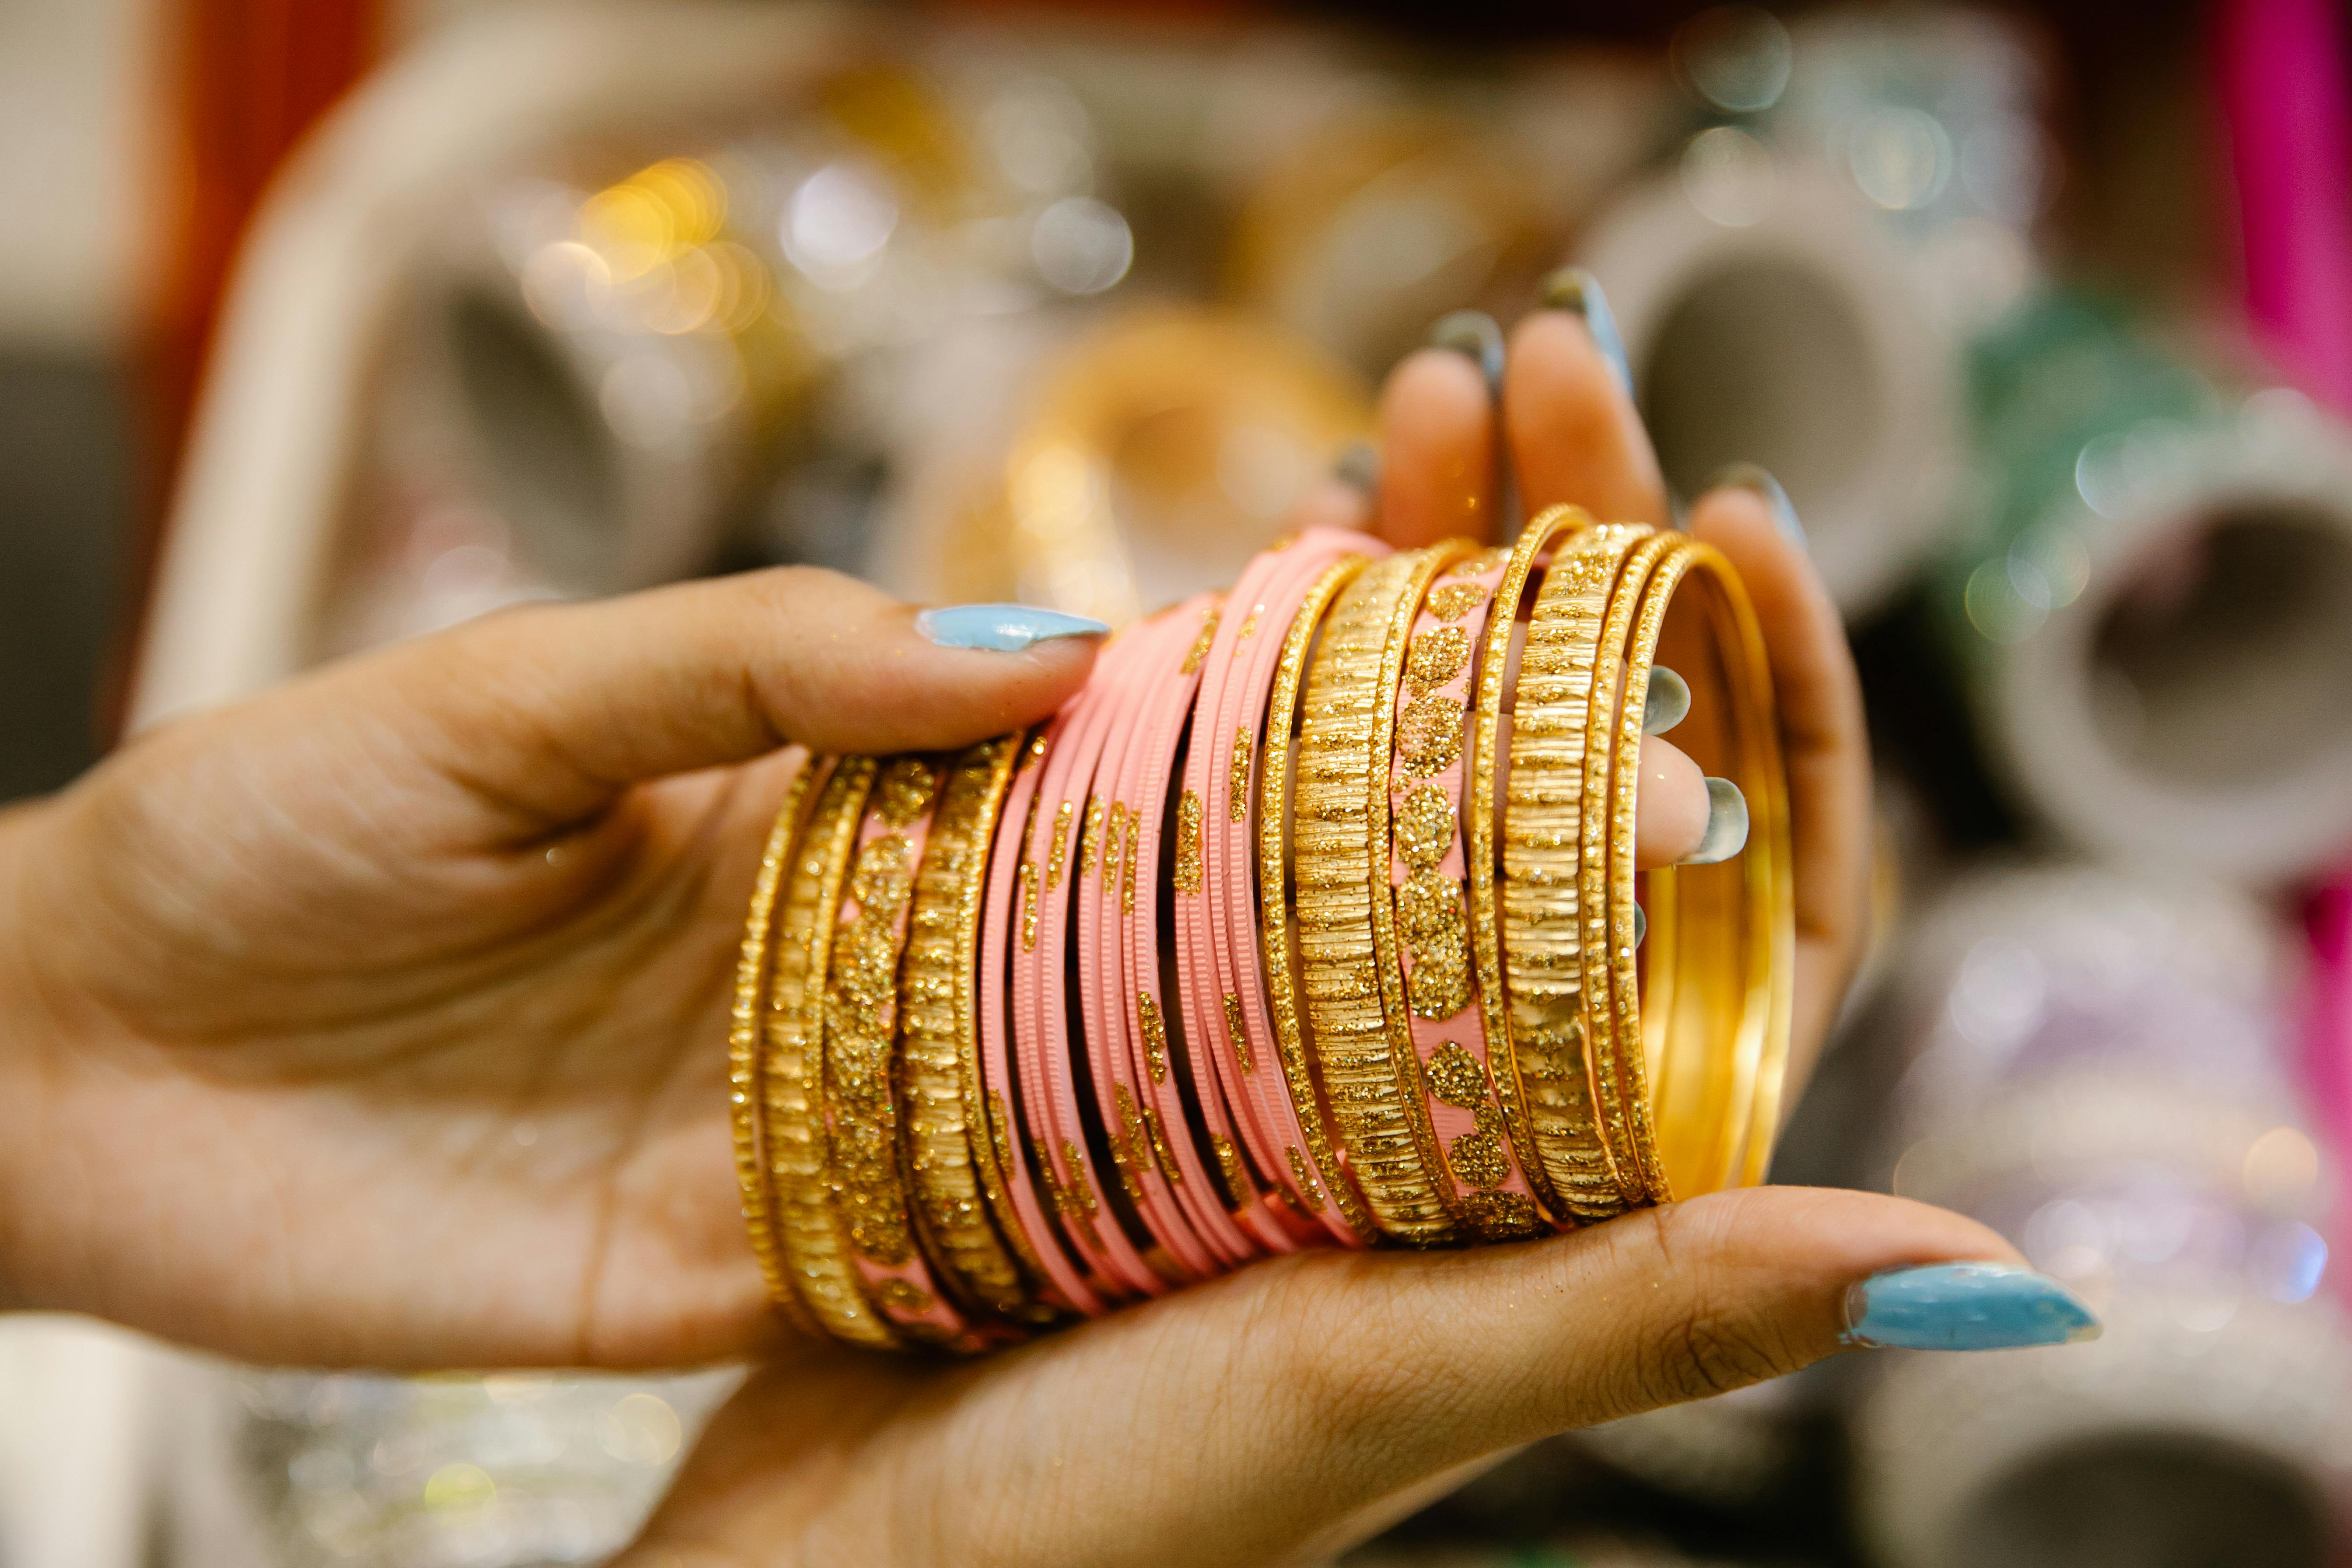 Gold Bracelet Hd Transparent, Gold Ring And Gold Bracelet Full Of Hands,  Gold Ring, Gold Bracelet, Gold PNG Image For Free Download | Gold bracelet,  Gold, Gold rings